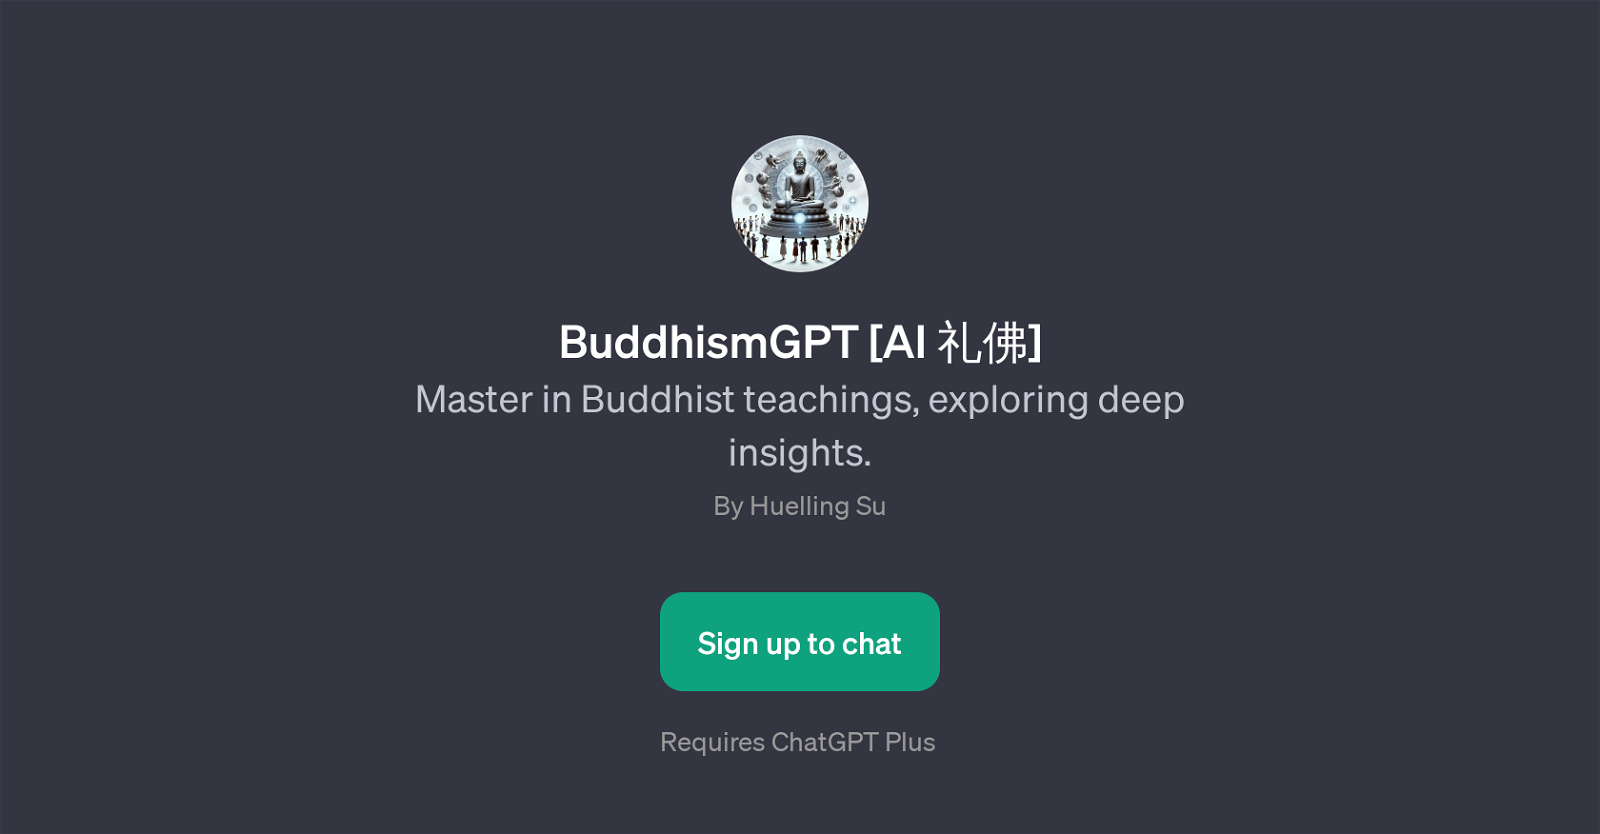 BuddhismGPT [AI ] website